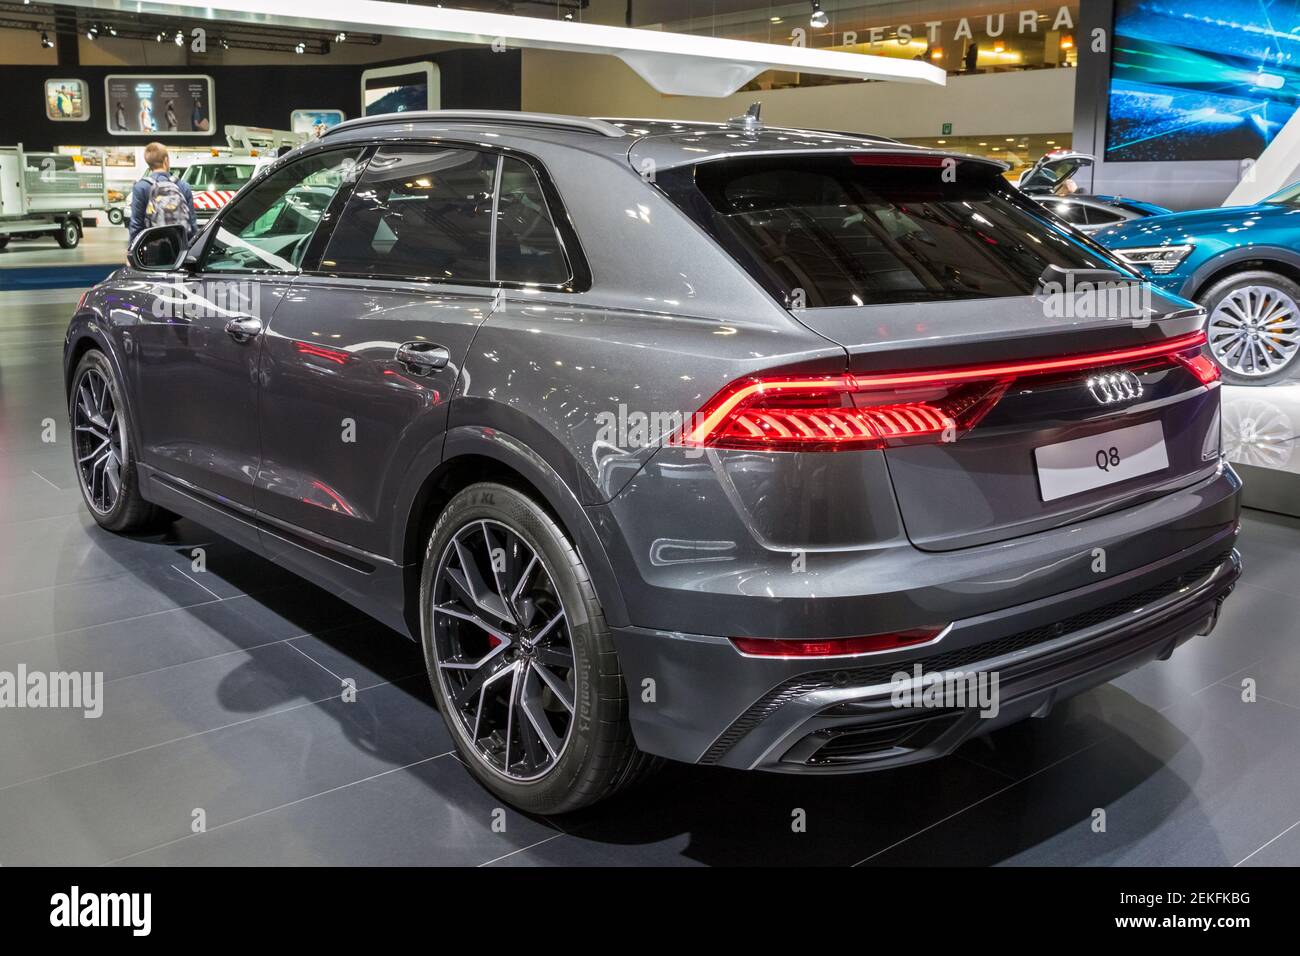 Audi Q8 luxury SUV car showcased at the Brussels Autosalon Motor Show. Belgium - January 18, 2019. Stock Photo